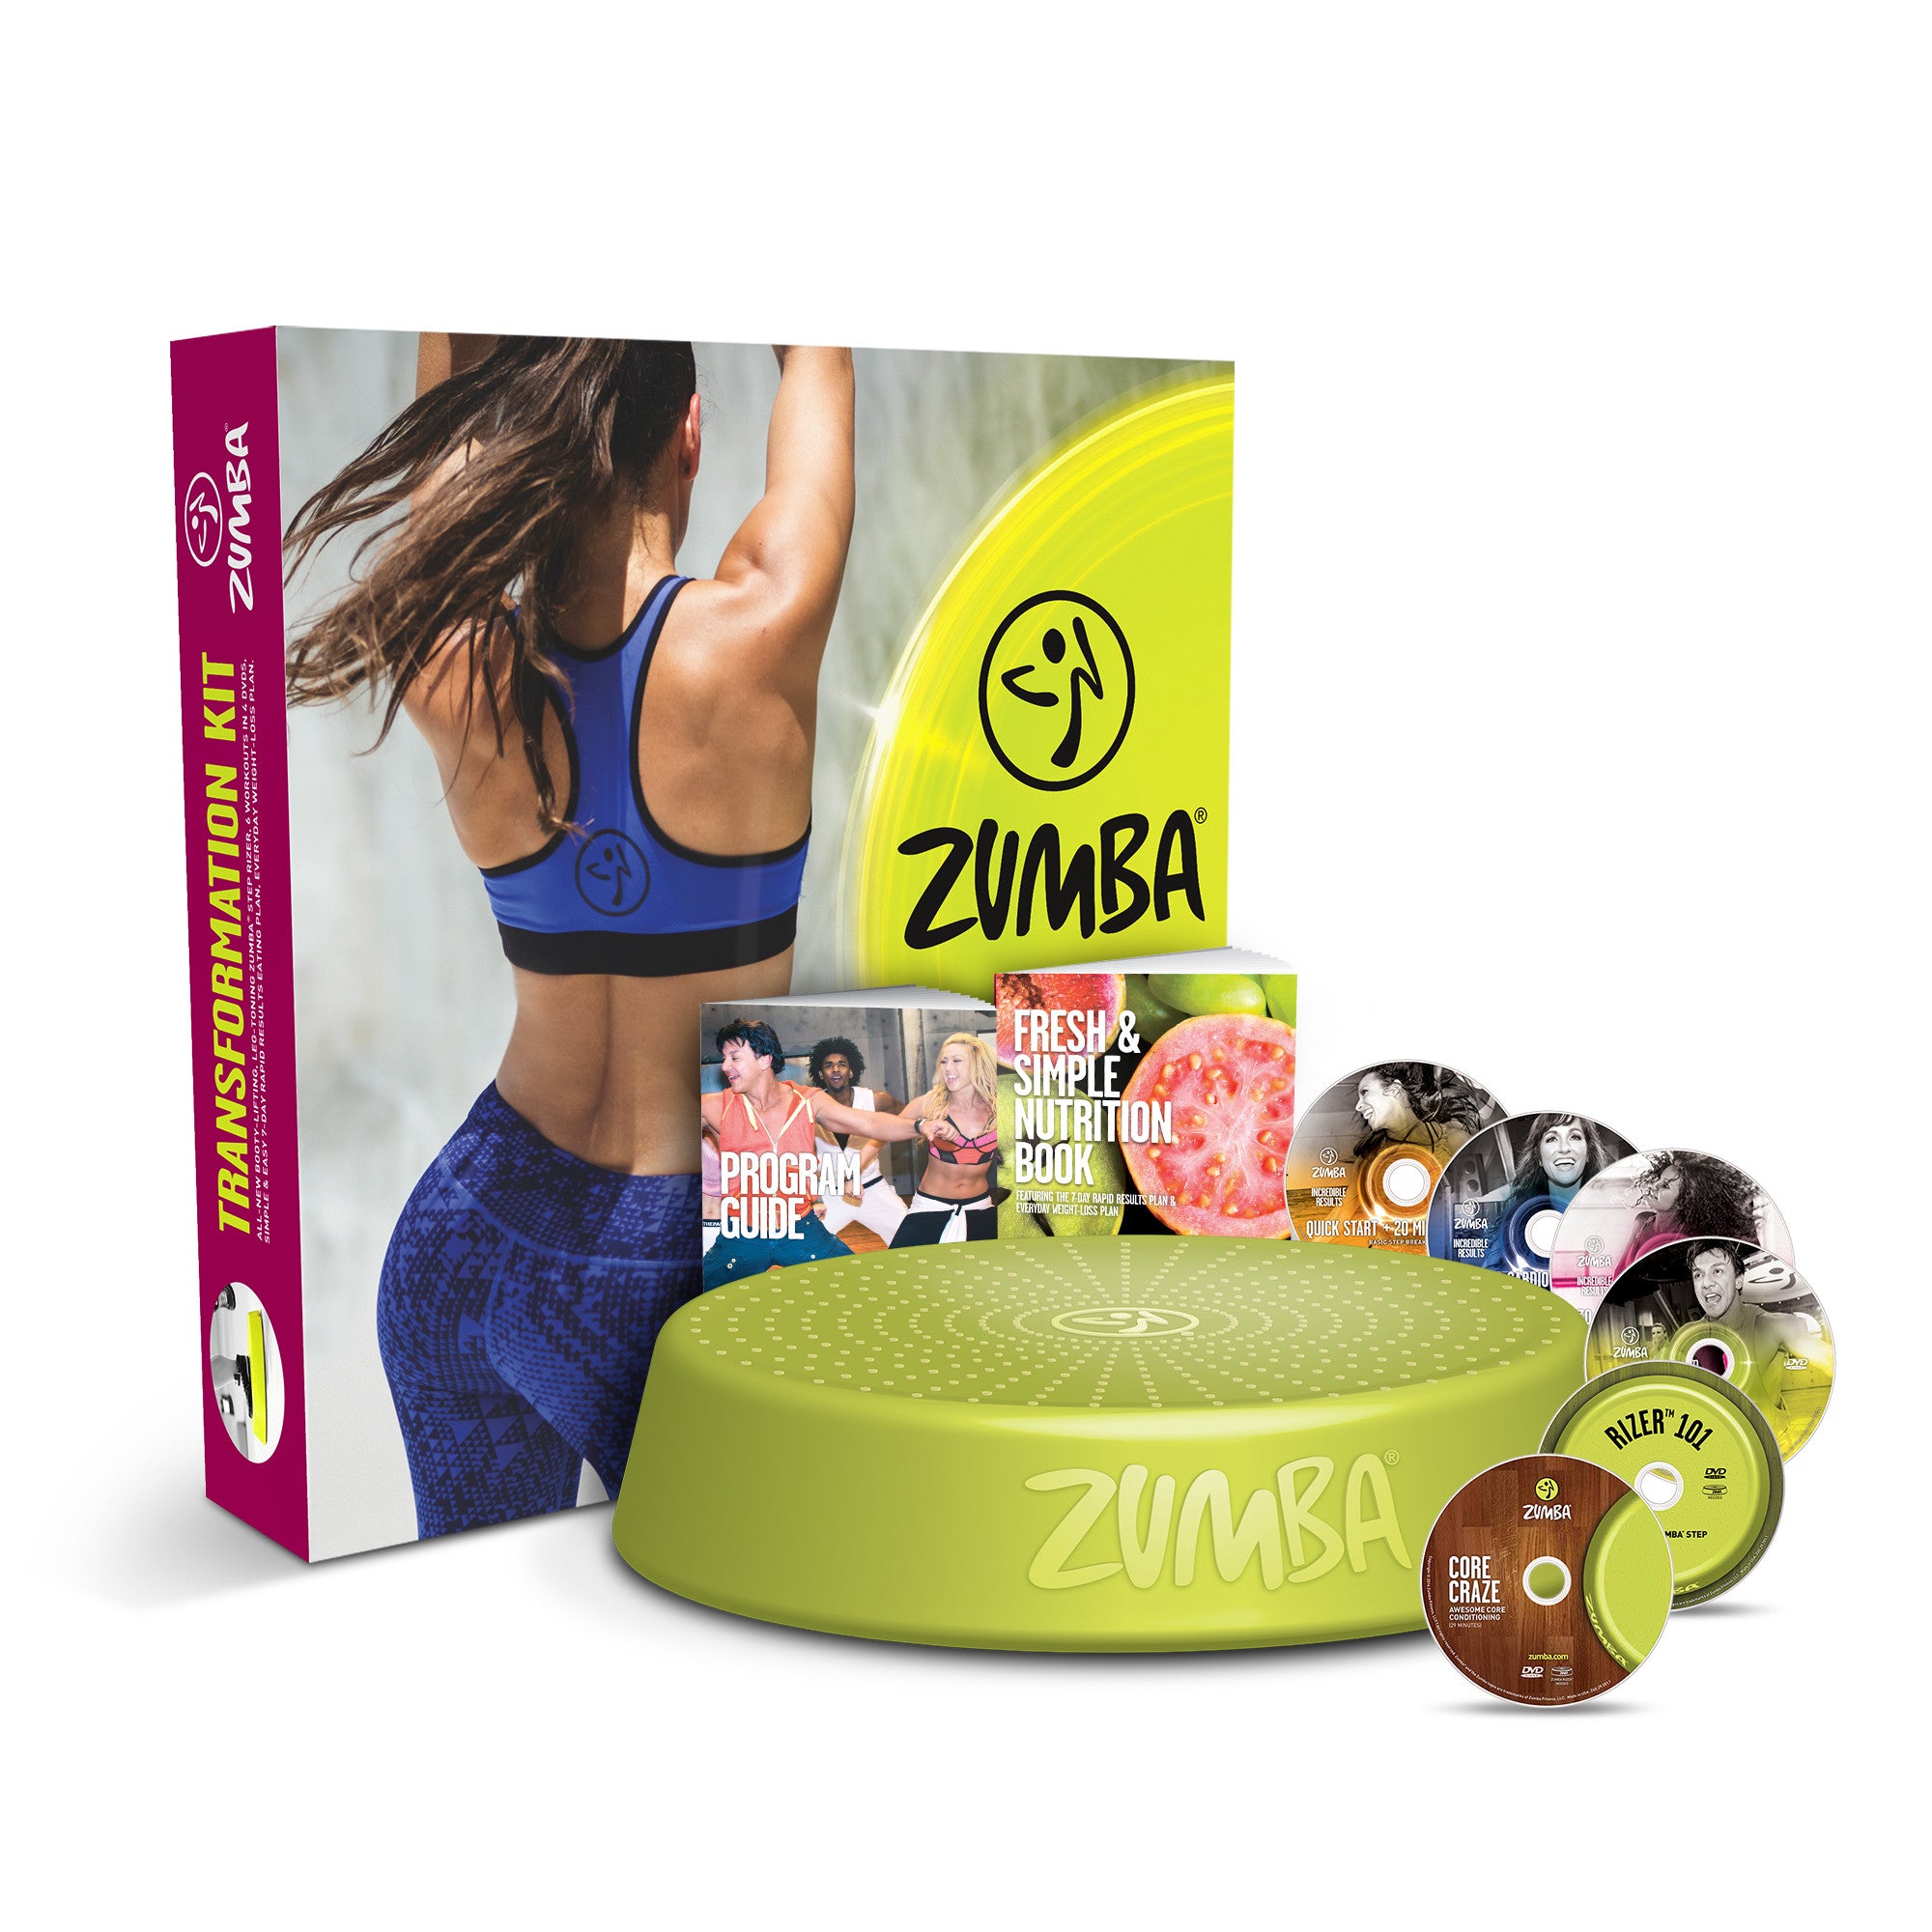 Zumba Incredible Results DVD & Rizer Box Set